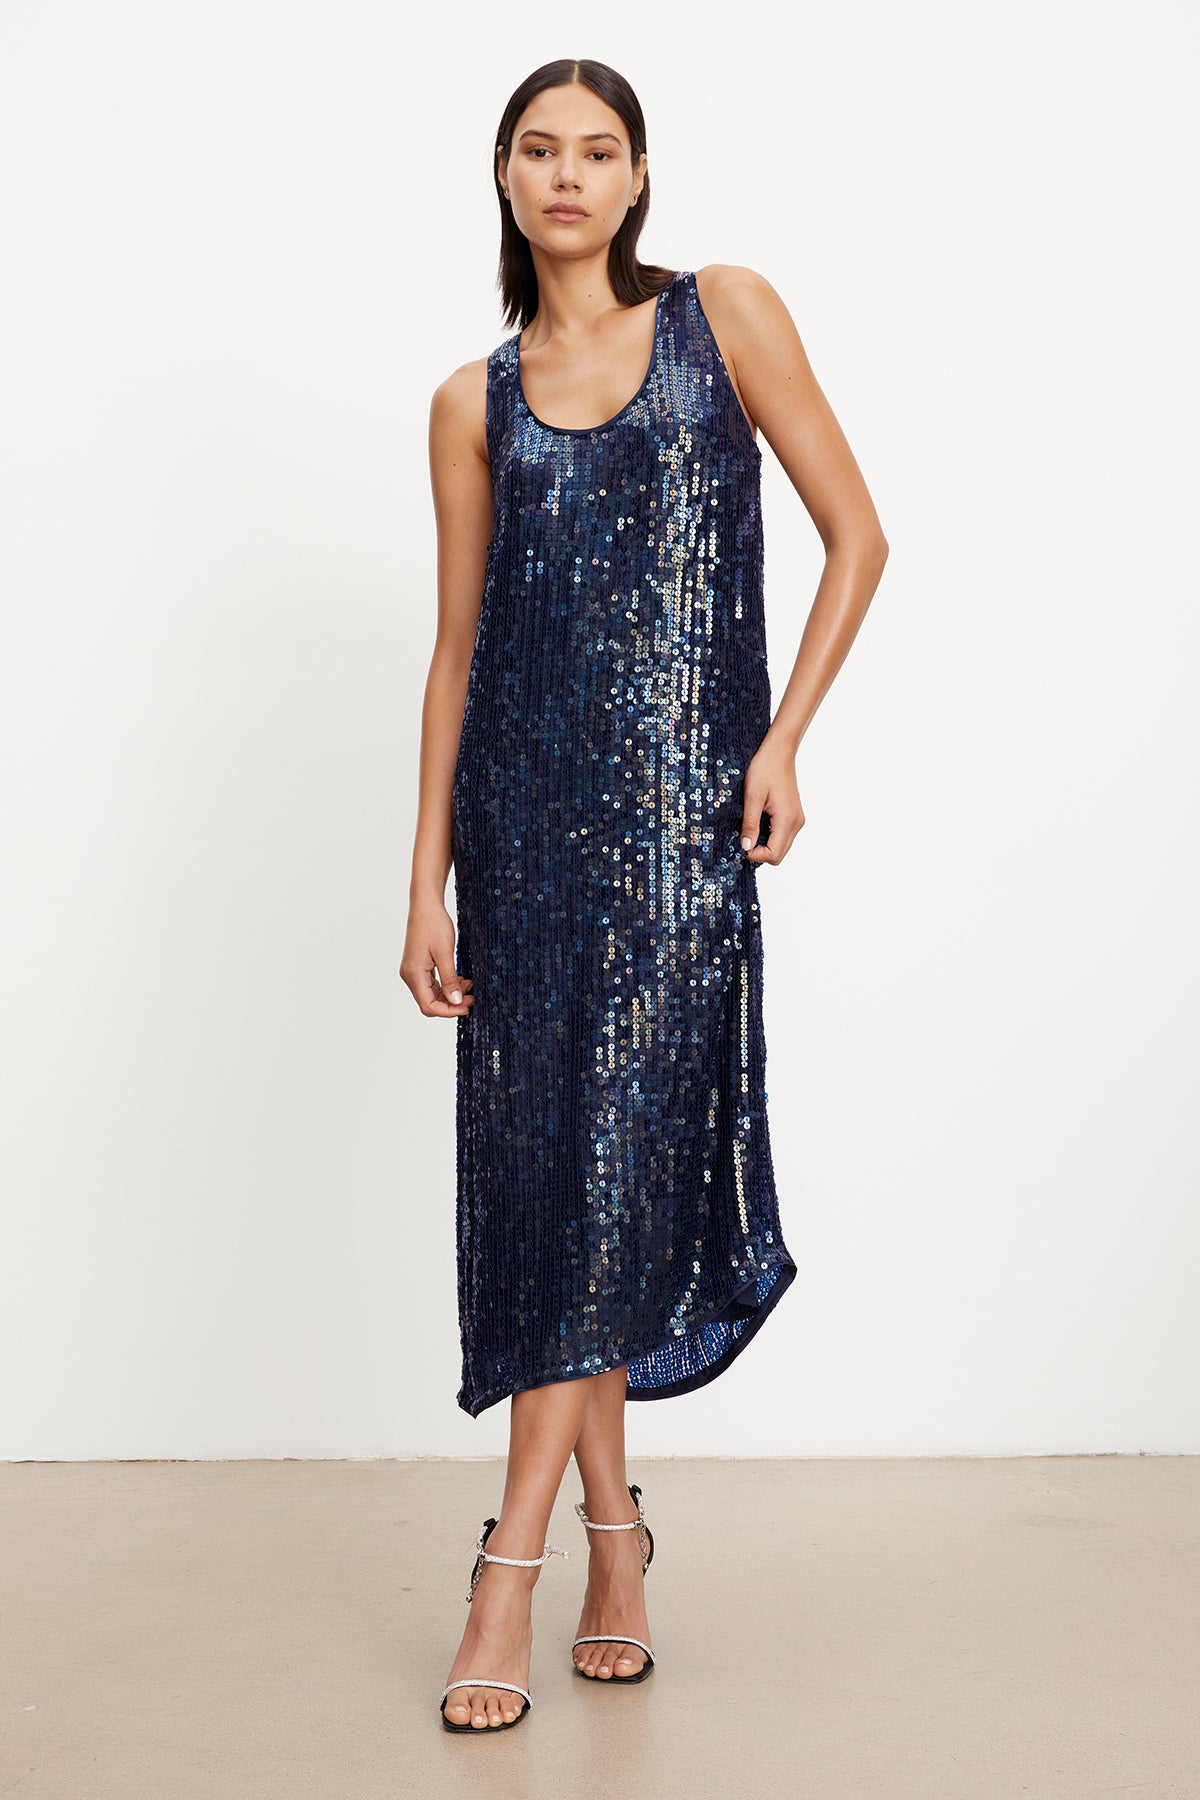   A model wearing an elegant Velvet by Graham & Spencer Alena Sequin Tank Dress. 